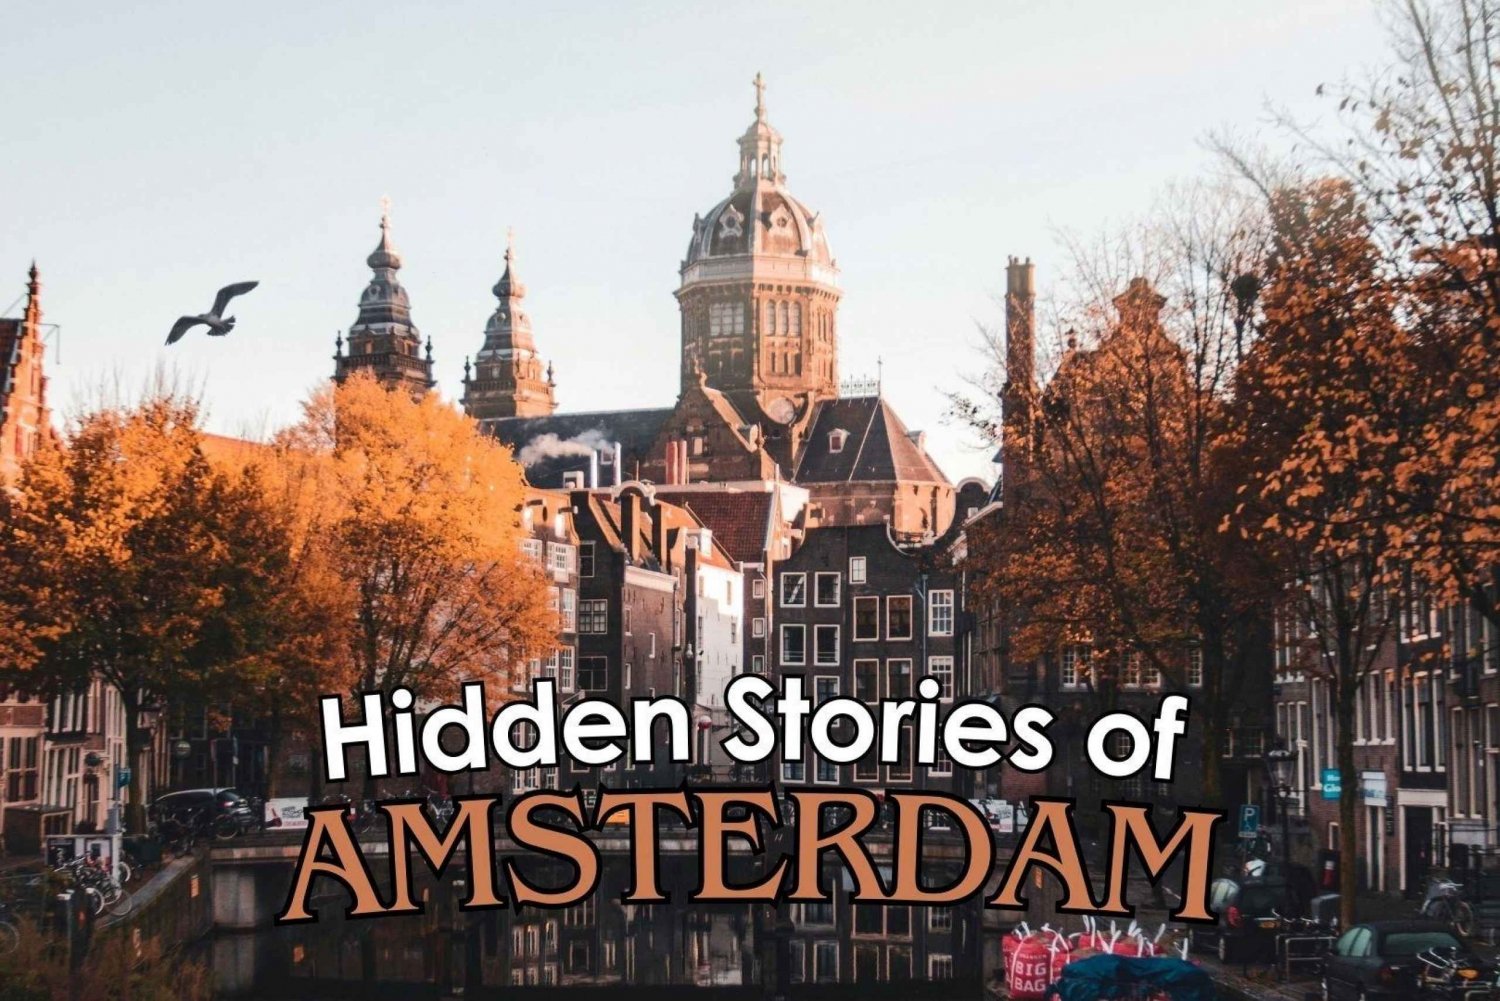 Amsterdam: Self-Guided Audio Tour via Smartphone App